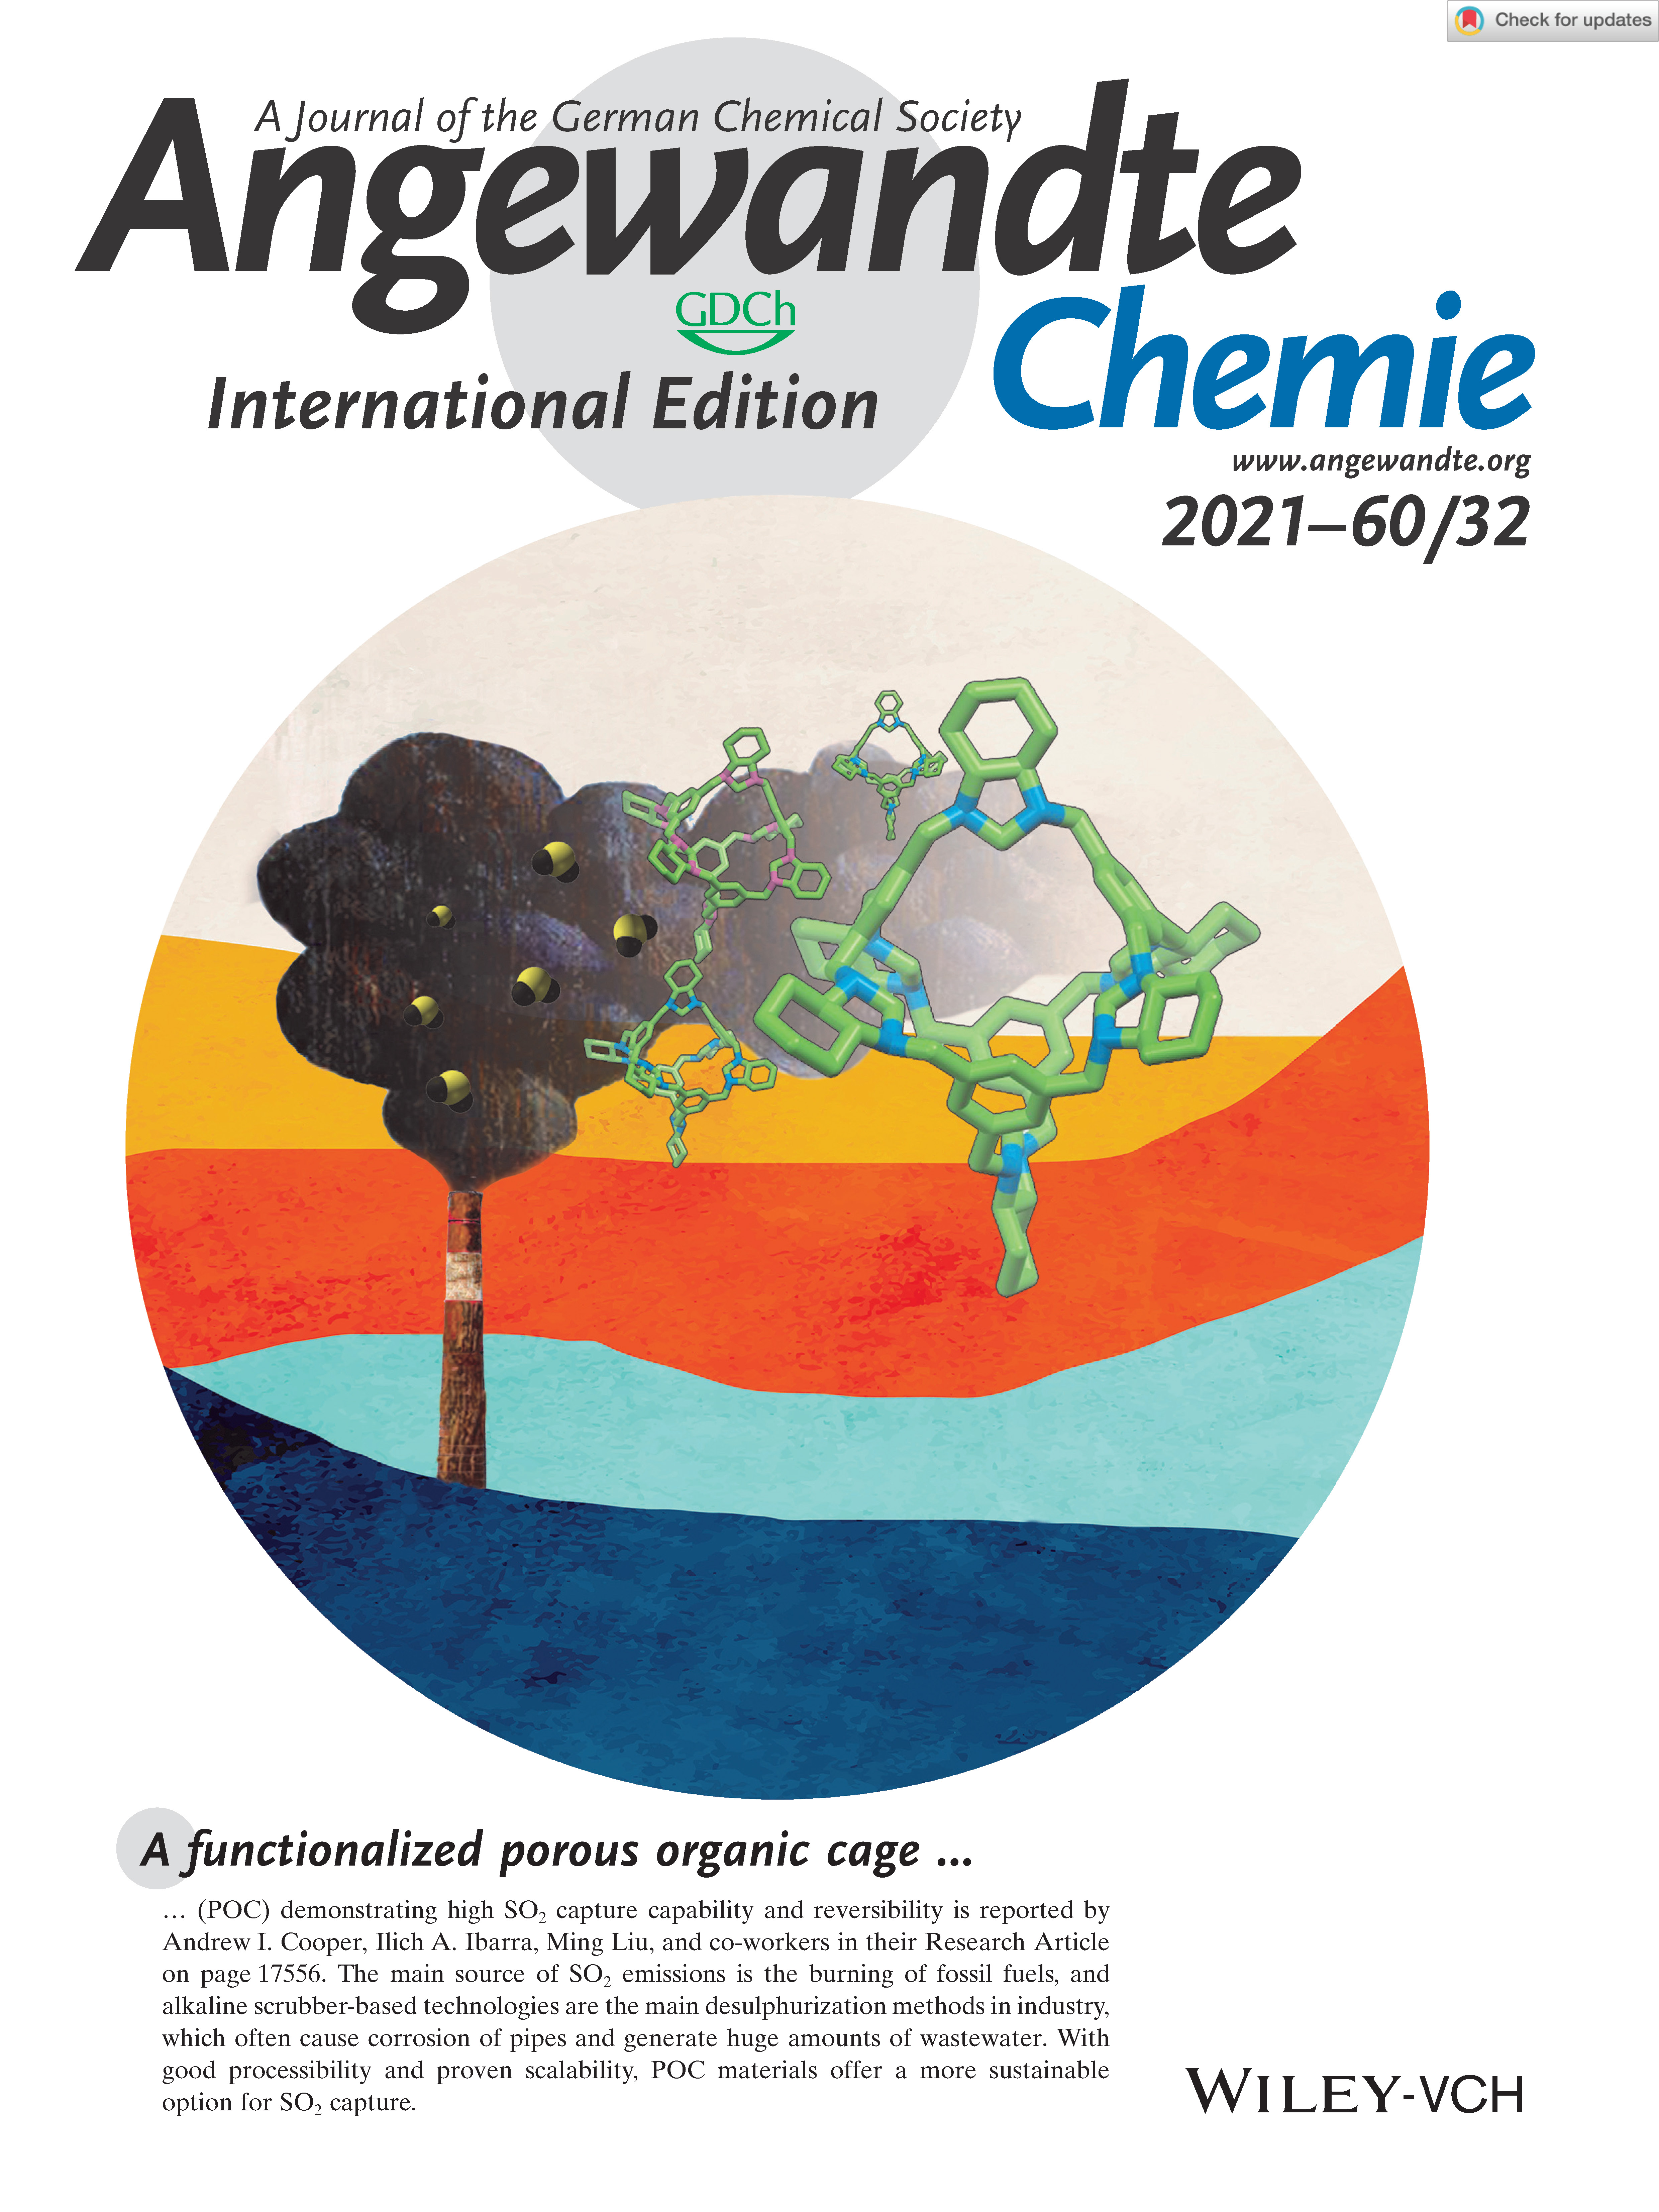 OAngewandte Chemie International Edition_Inside Back Cover of the Magazine: